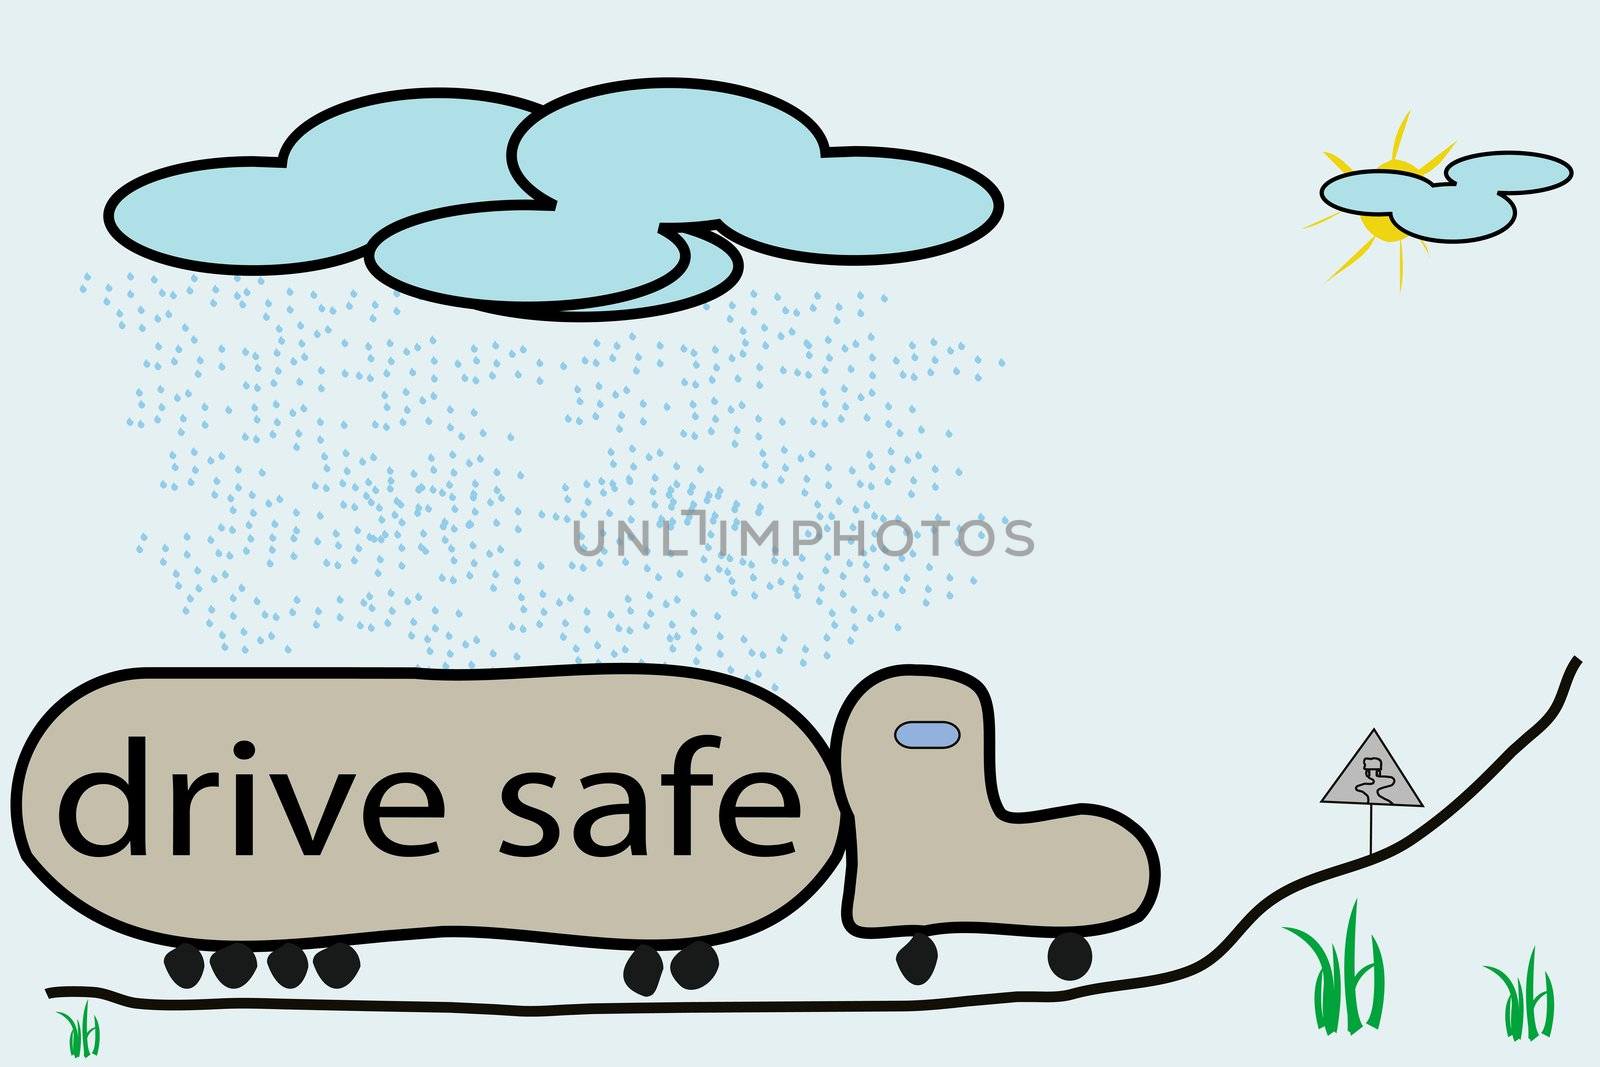 drive safe illustration by robertosch